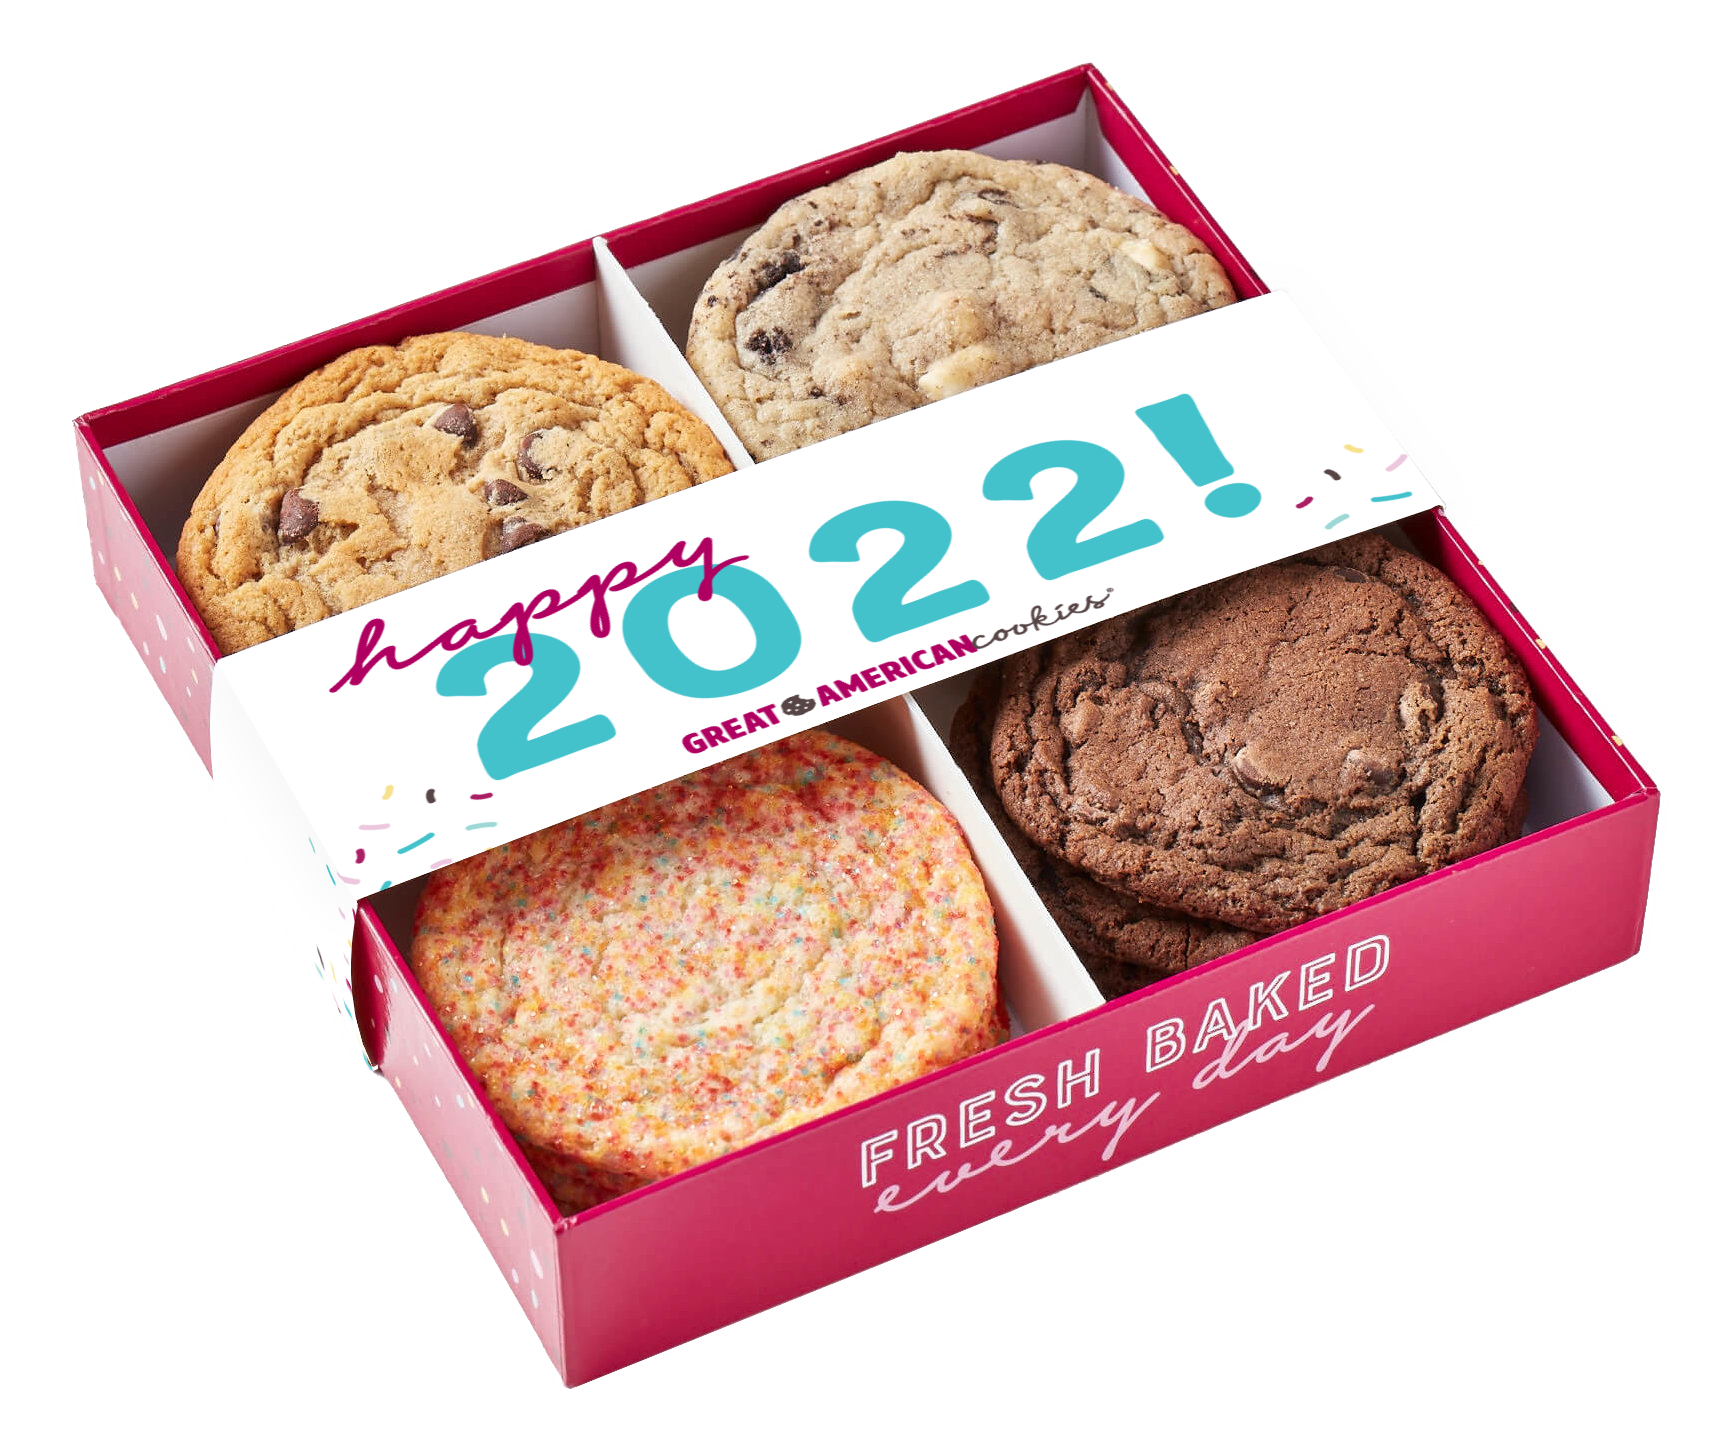 Happy 2022 cookie gift box